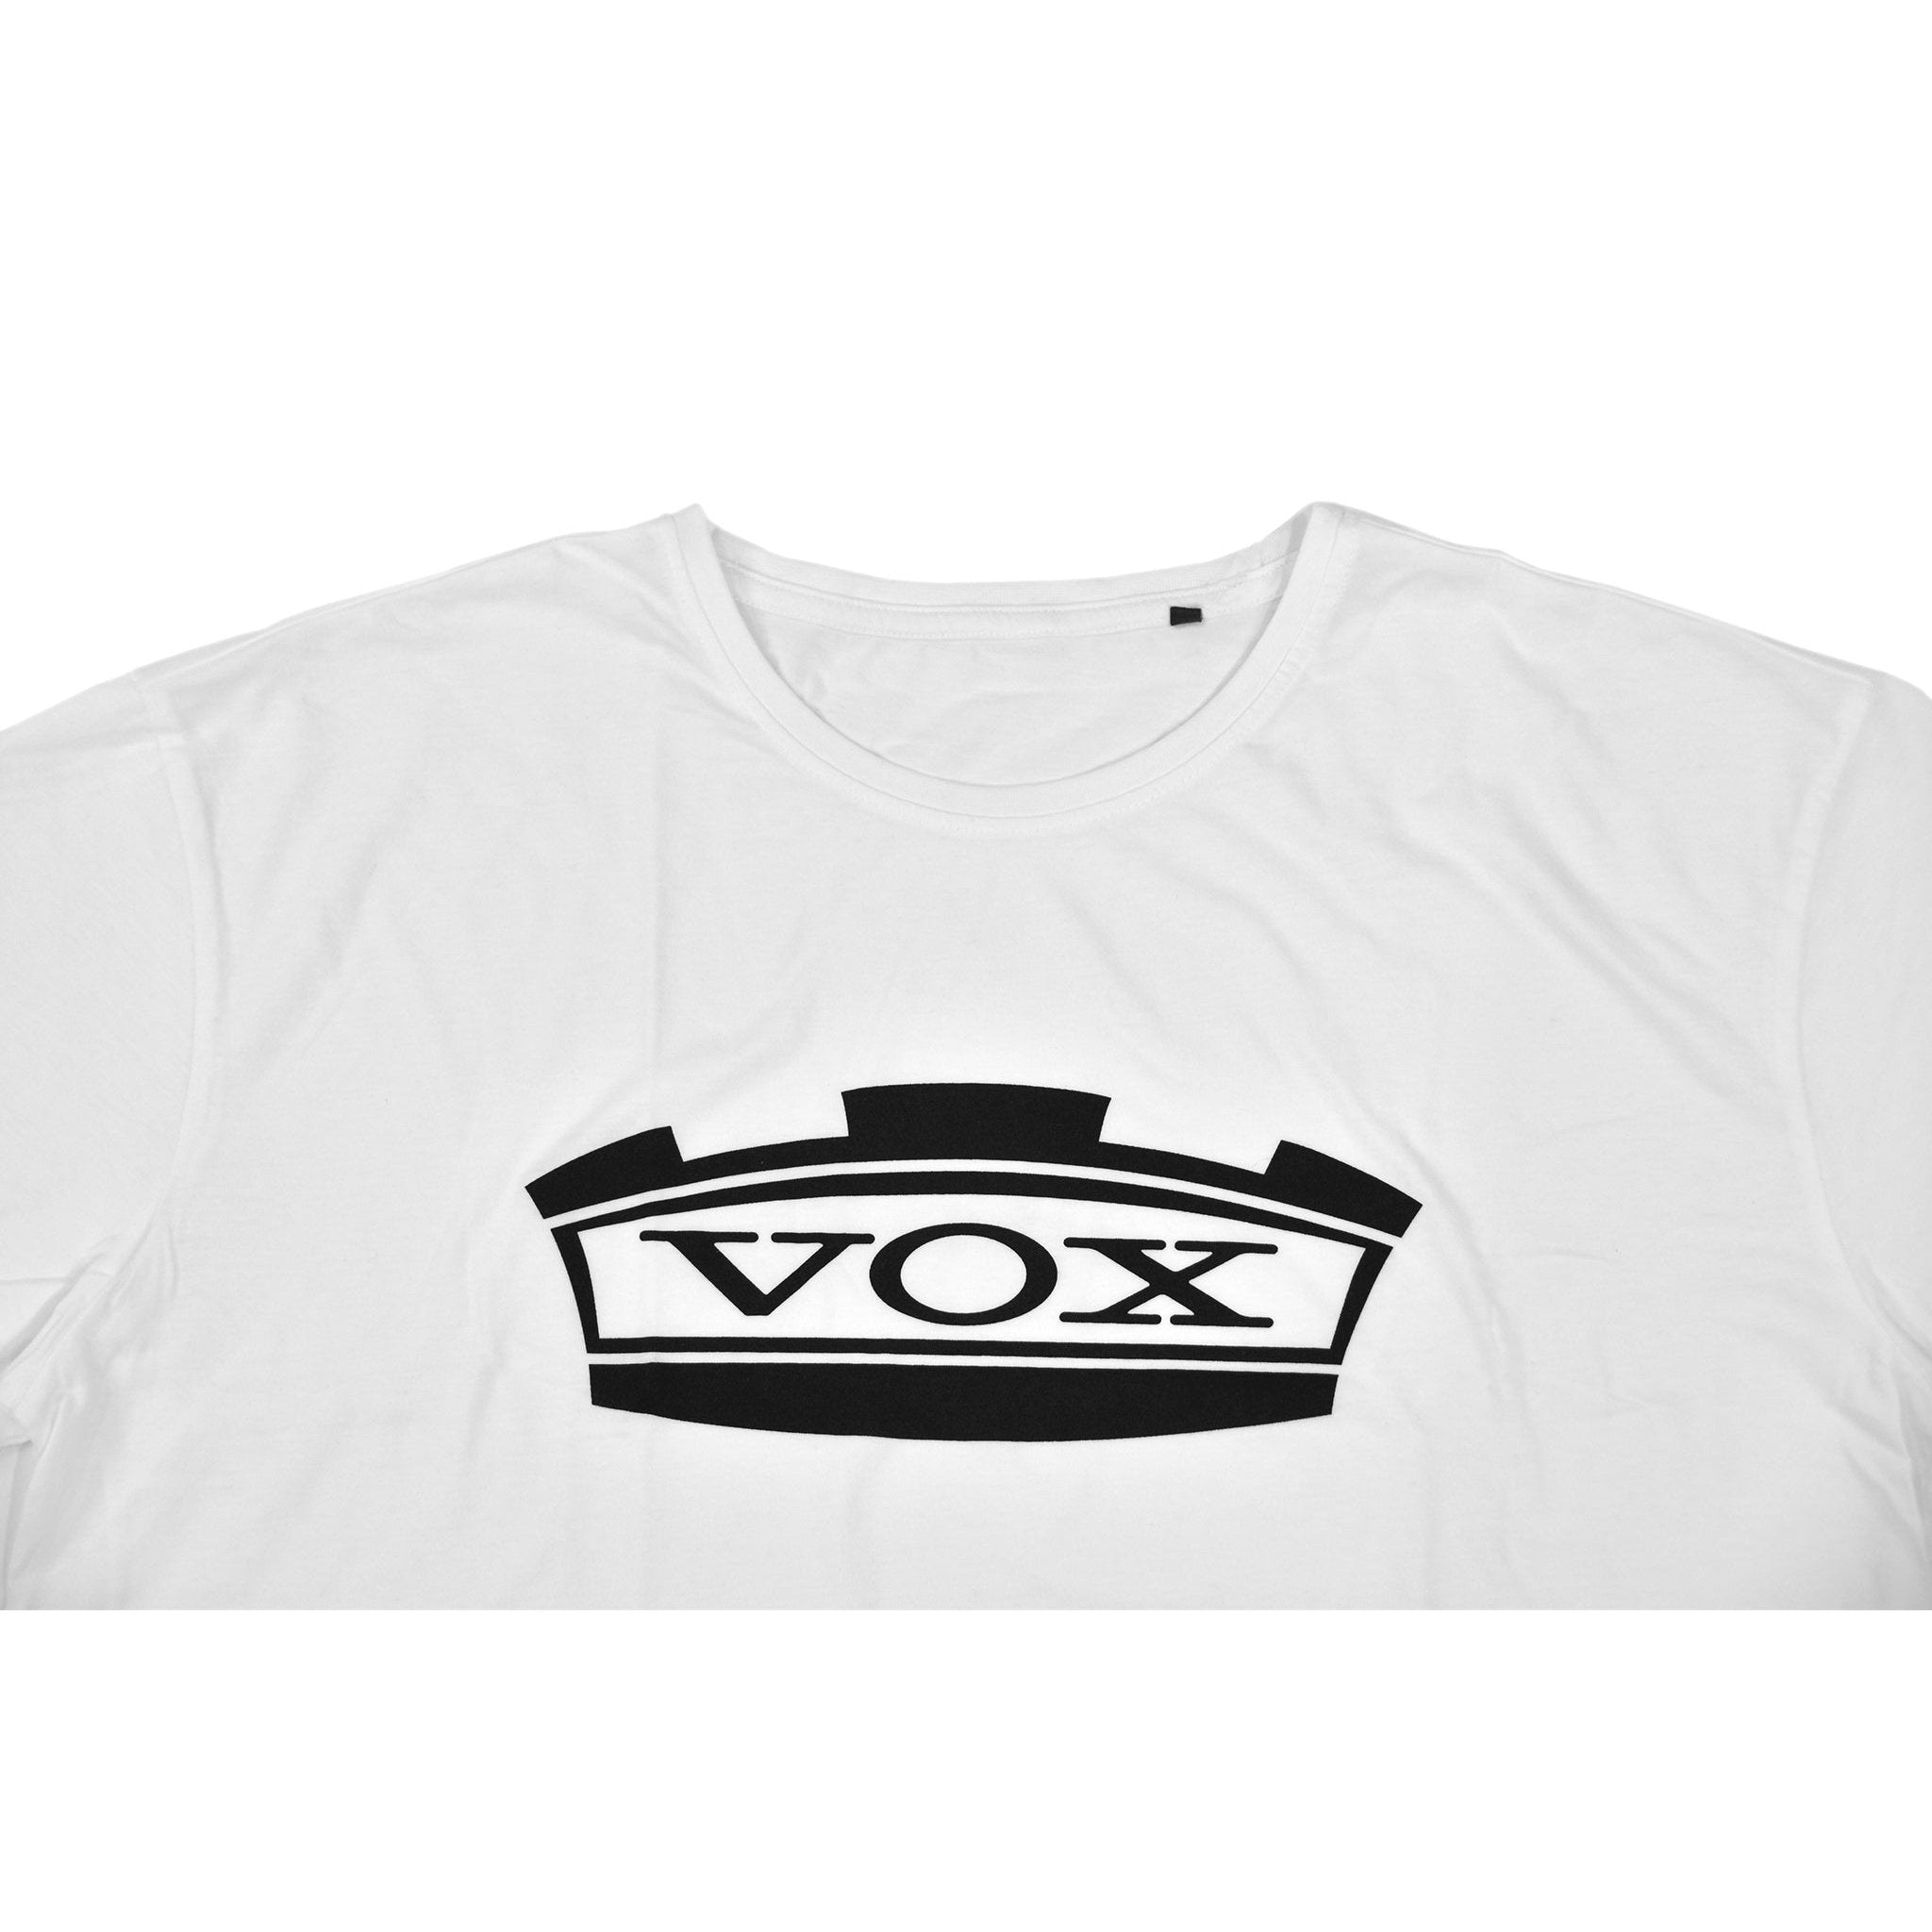 Vox Logo T-Shirt 6